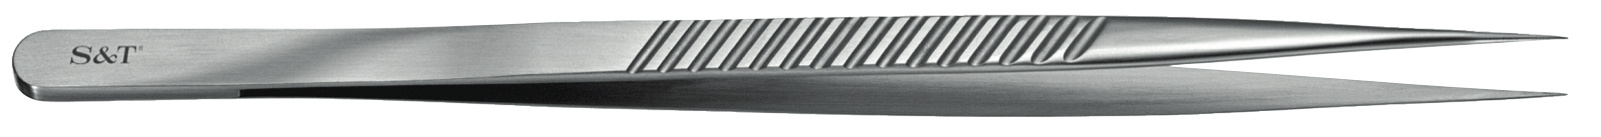 S&T Forceps 18cm JF-3-18P Flat Handle 0.3mm Straight Plateau Tips